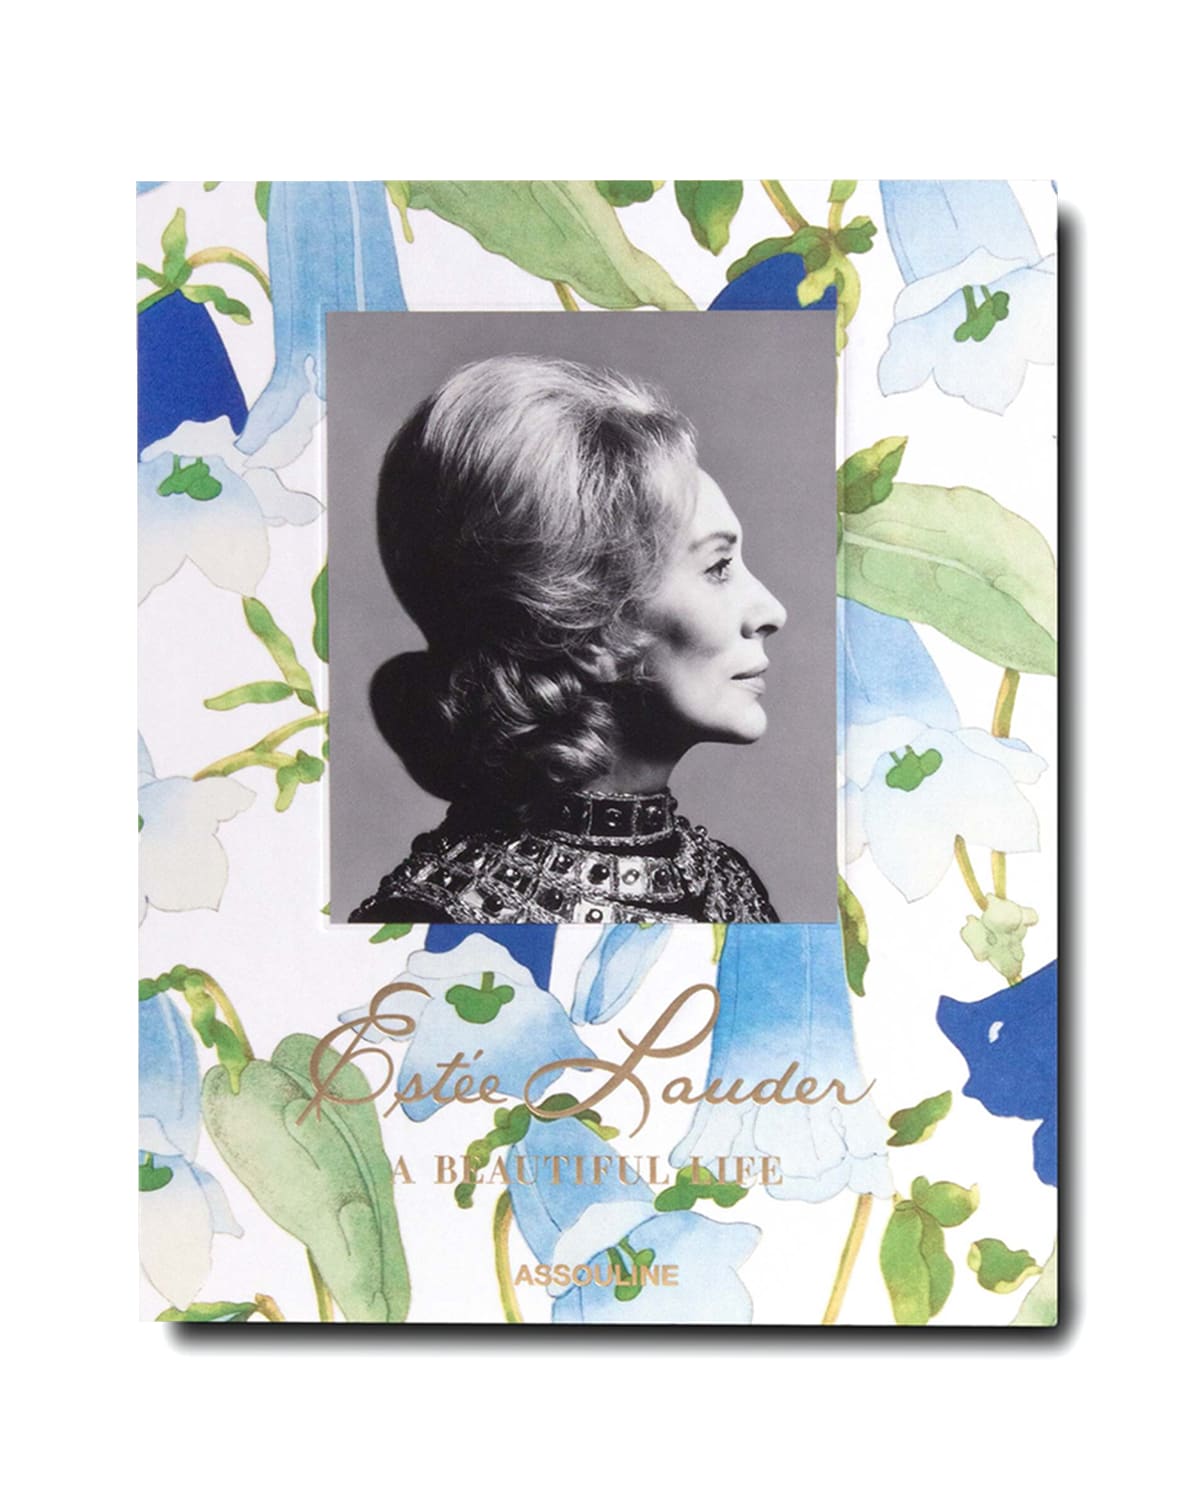 Estee Lauder: A Beautiful Life Book